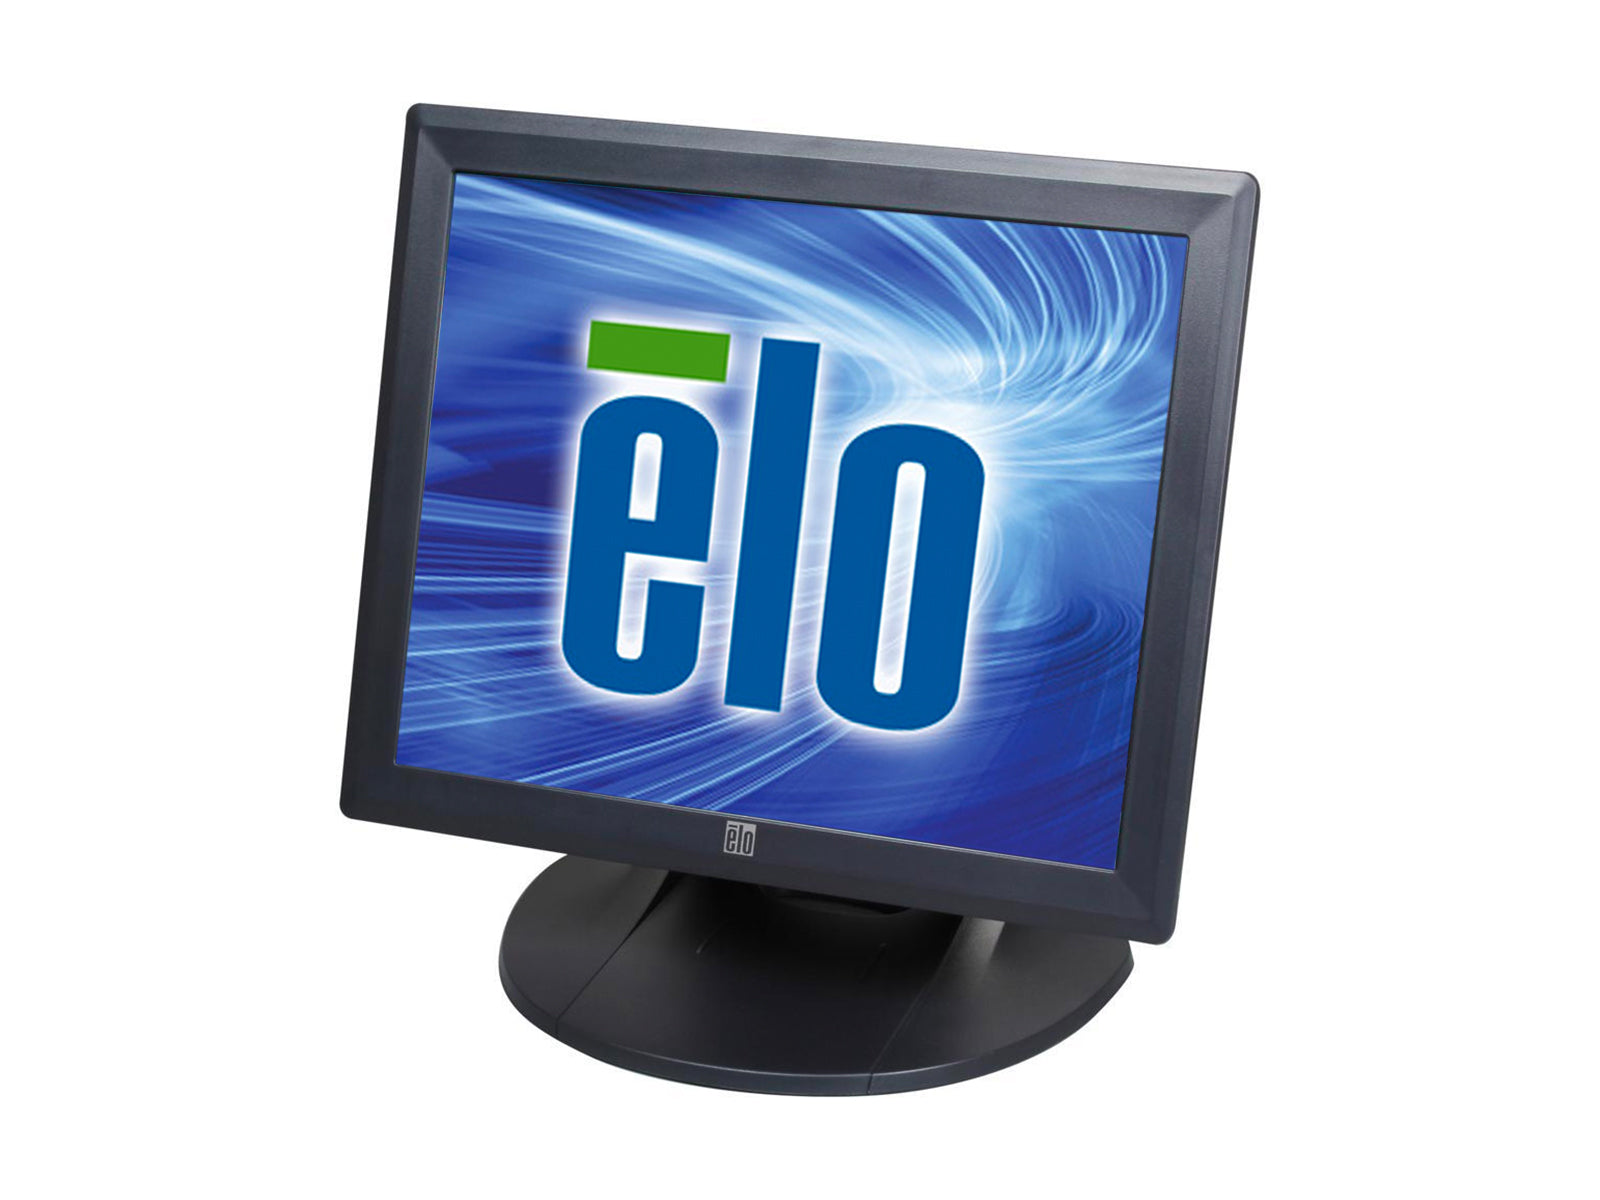 Elo 1729L Touchscreen 17" 1280 x 1024 LED-Monitor (E261247) Monitors.com